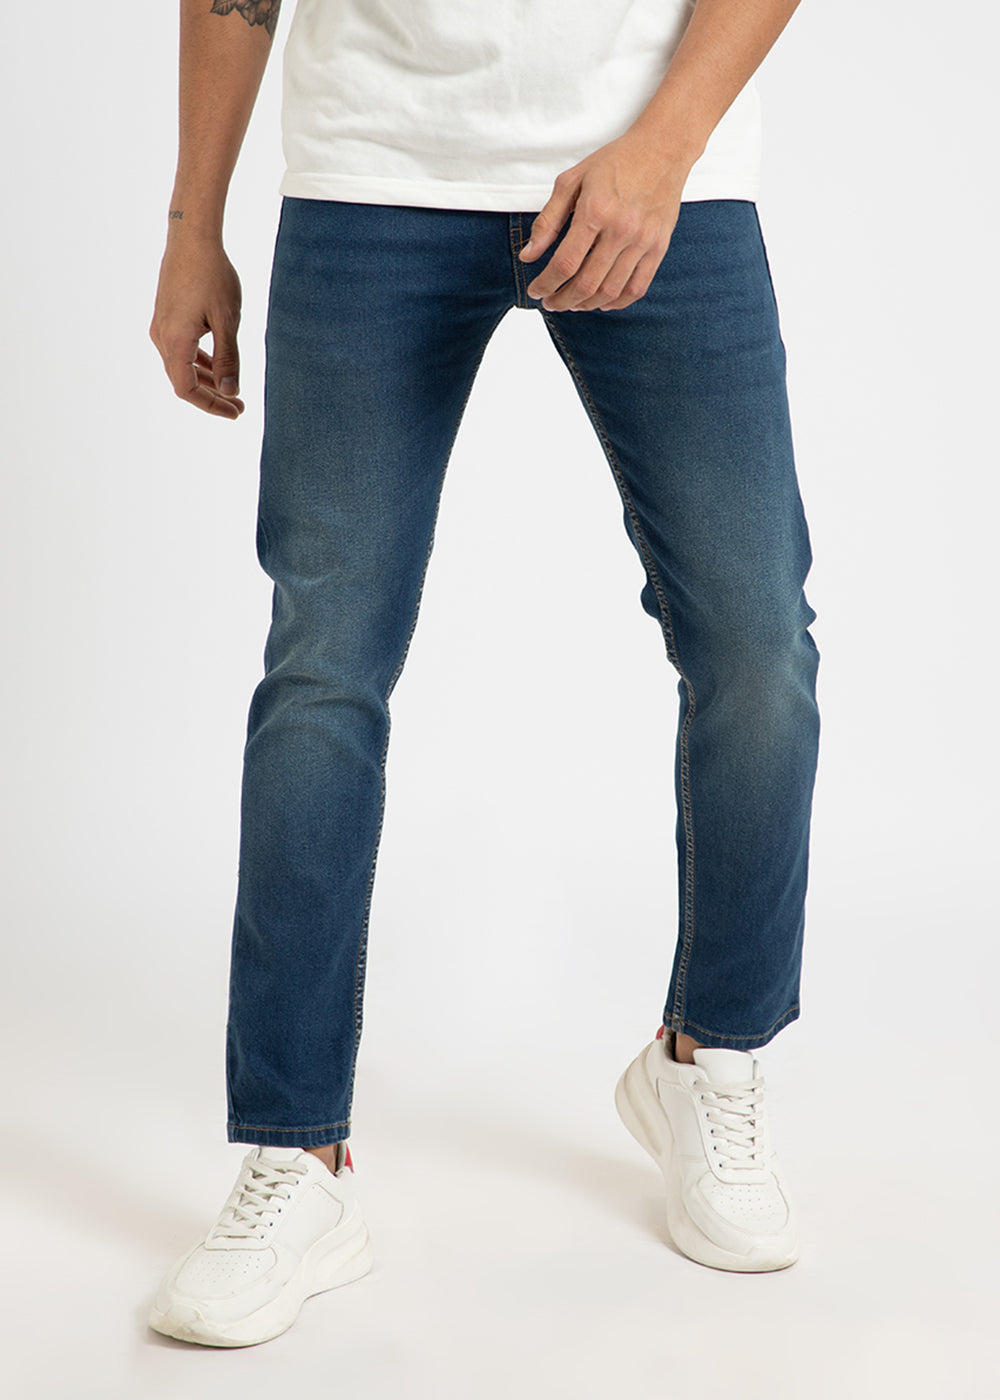 Teal Blue Slim fit Jeans